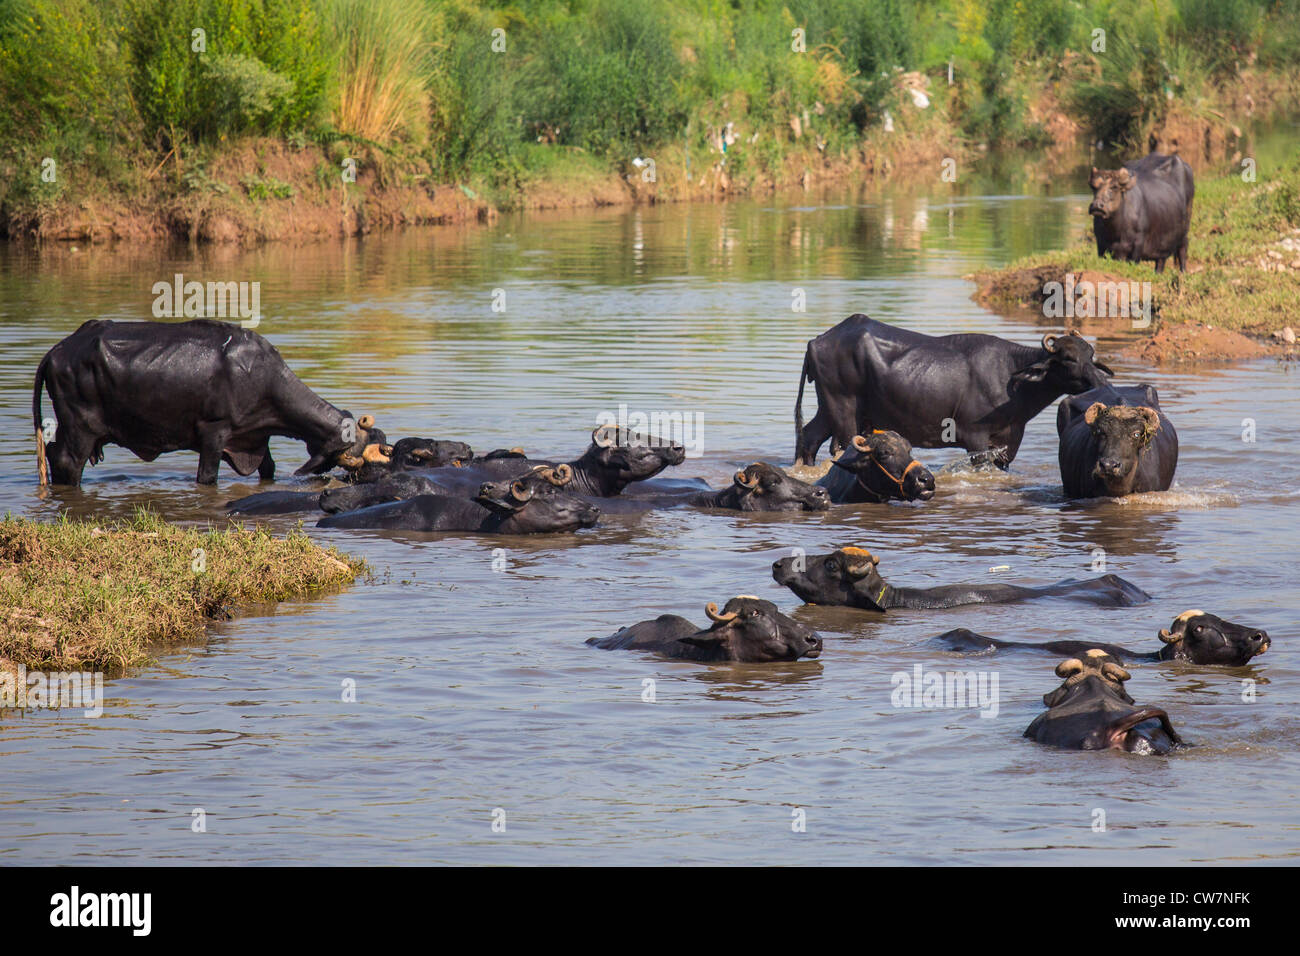 Water buffalo in the river in Islamabad, Pakistan Stock Photo - Alamy